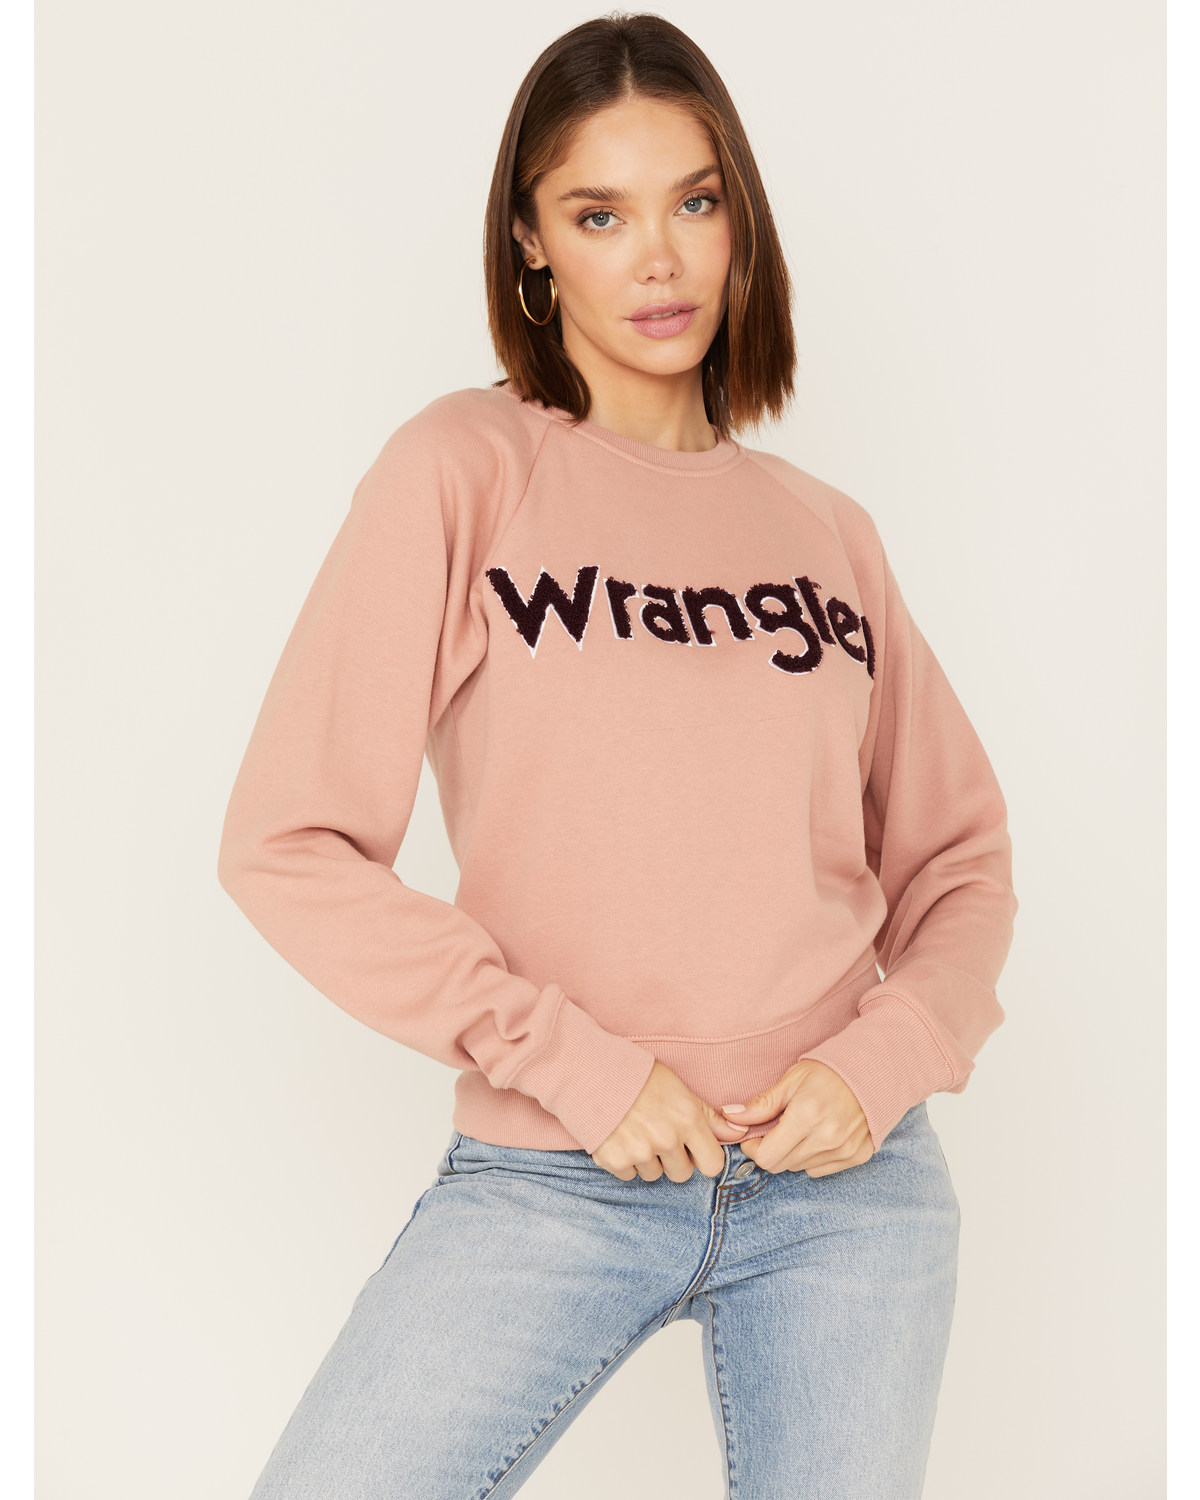 Wrangler Retro Women's Embroidered Logo Sweatshirt